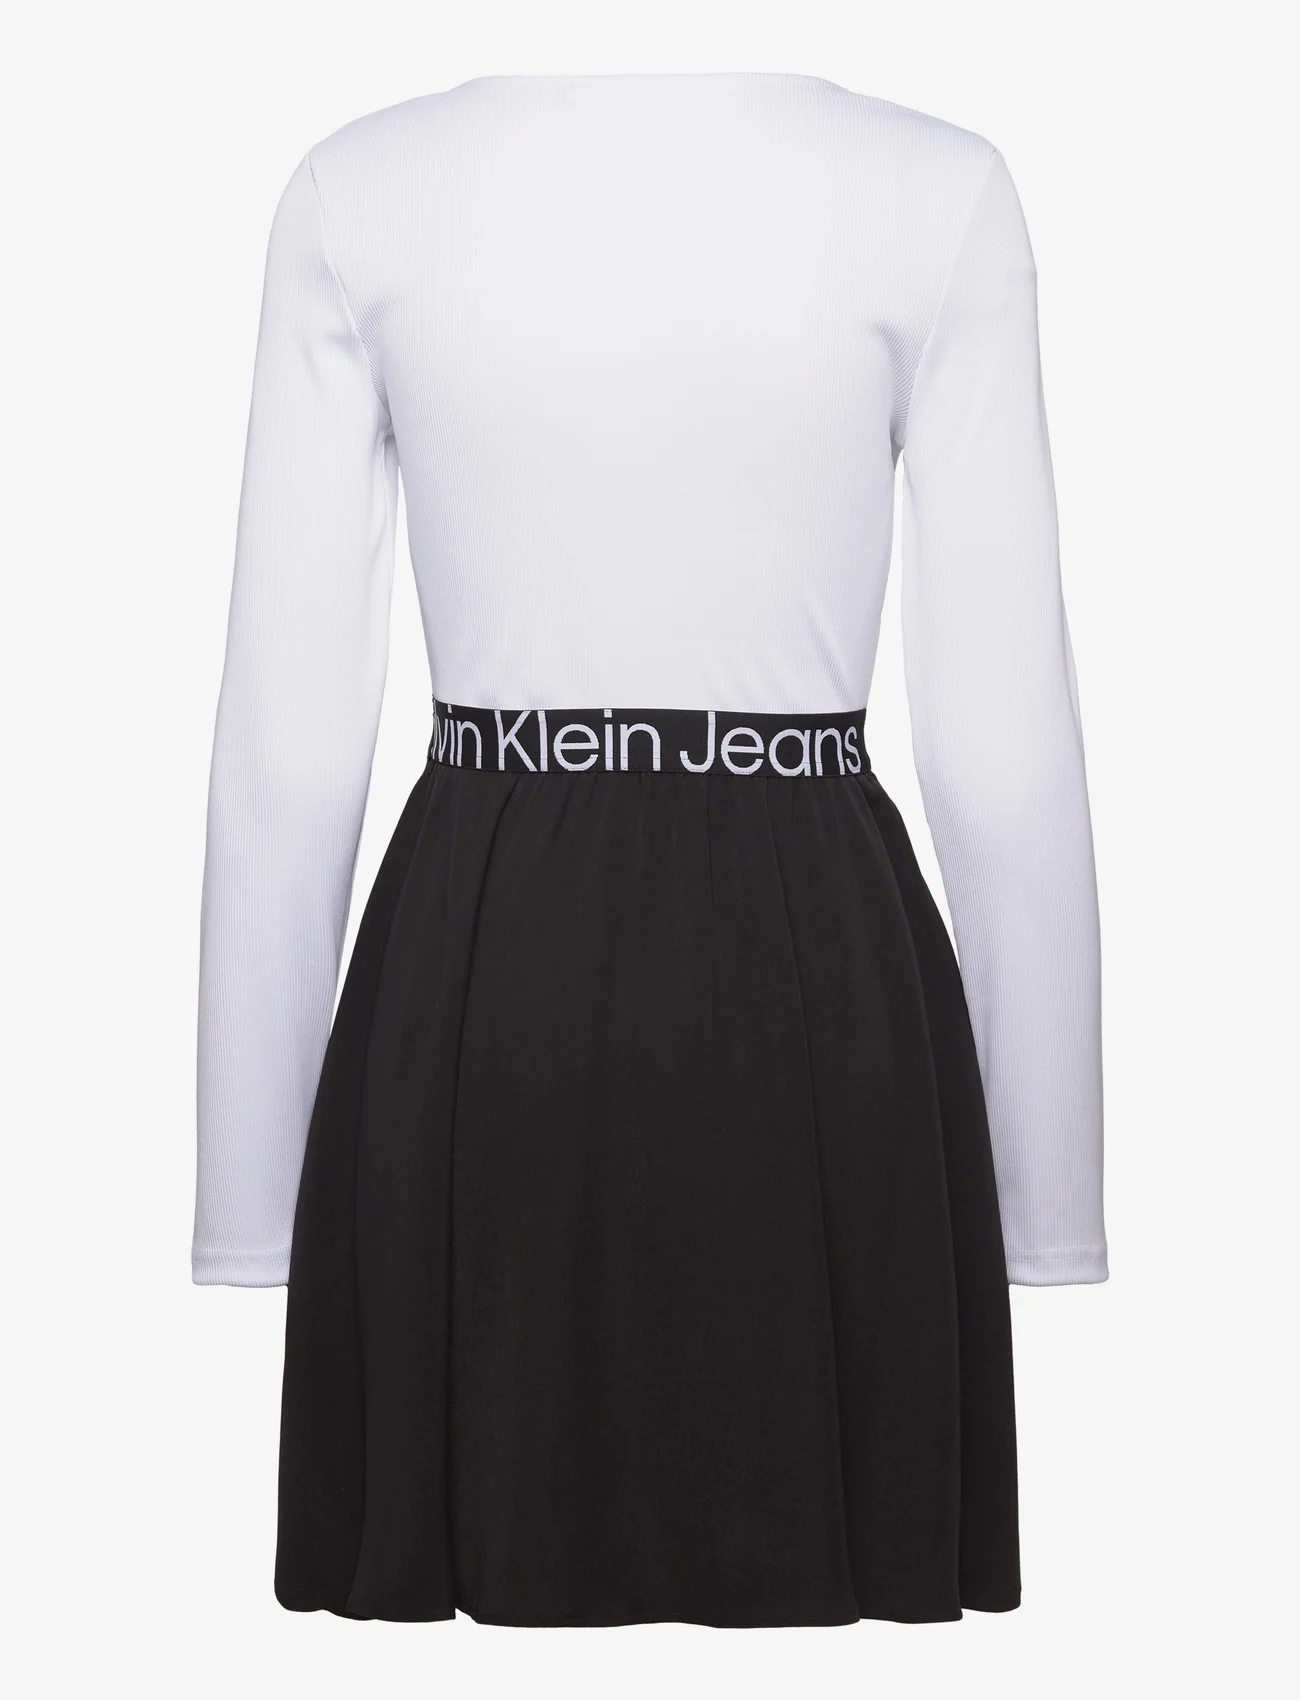 Calvin Klein Jeans - LOGO ELASTIC LONG SLEEVE DRESS - midi dresses - bright white / ck black - 1